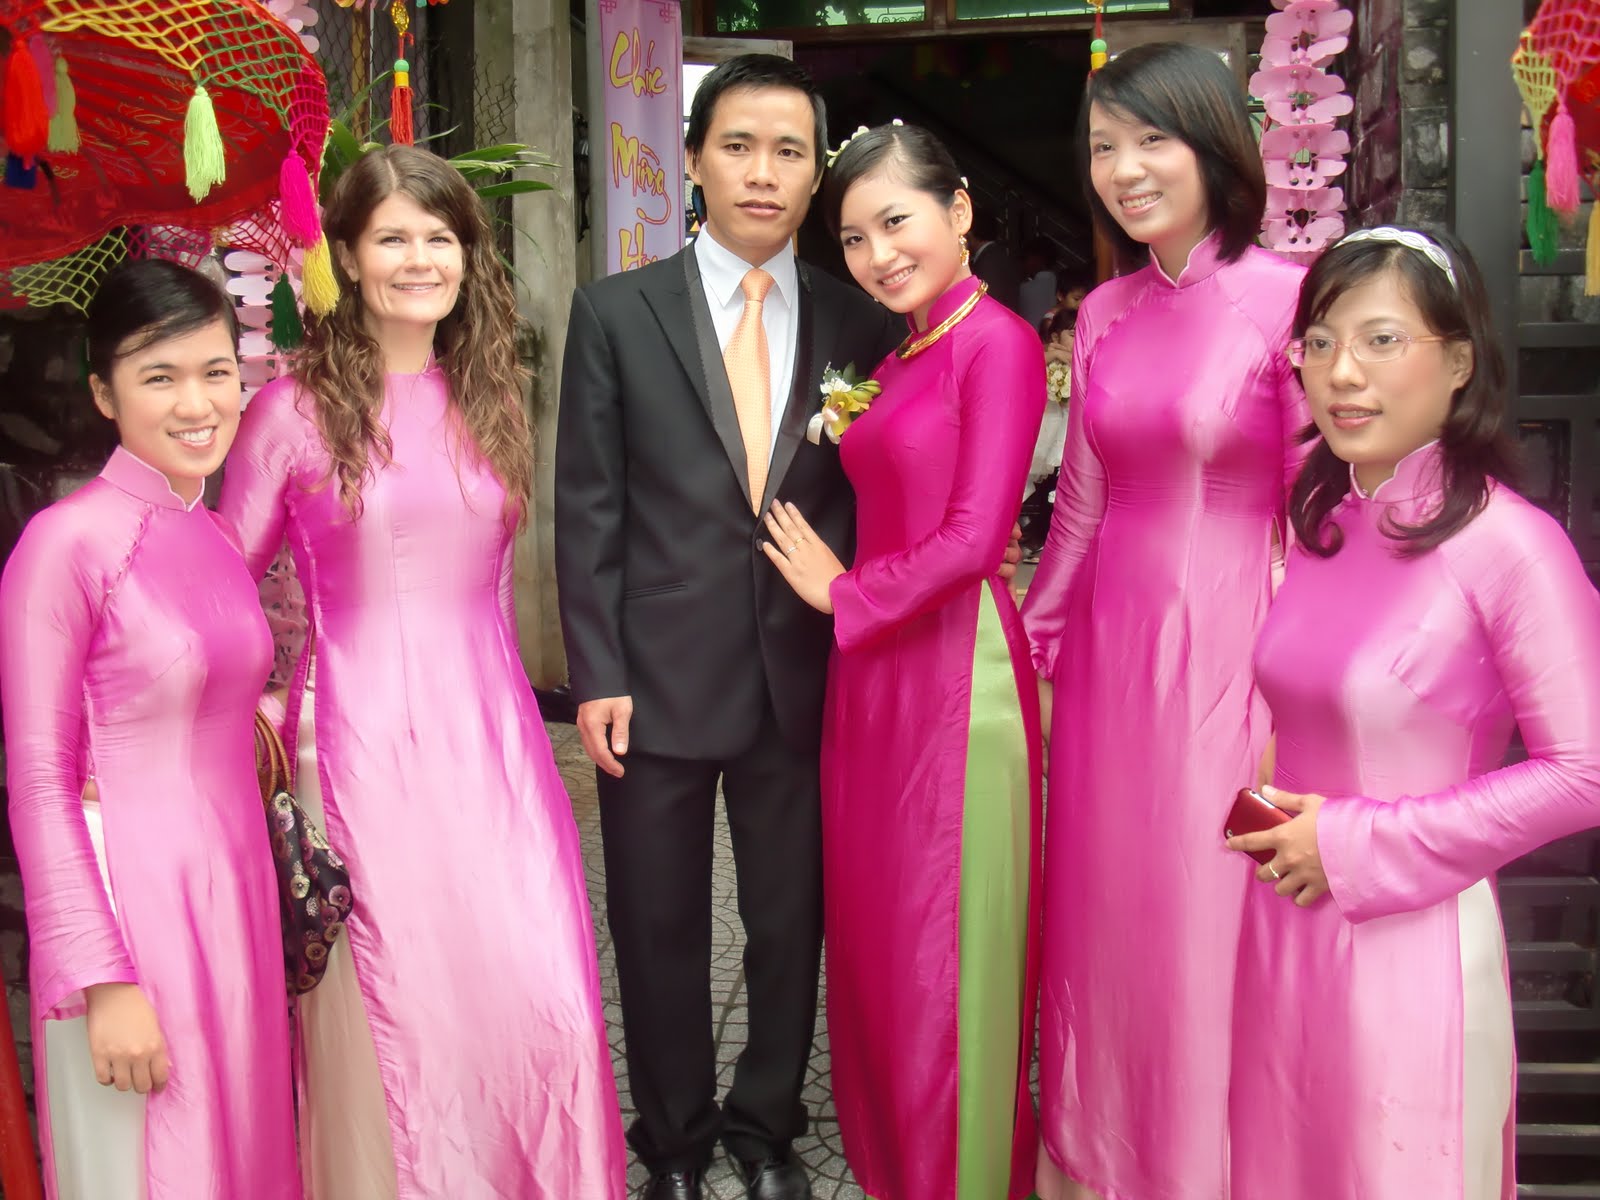 Vietnam bride photo